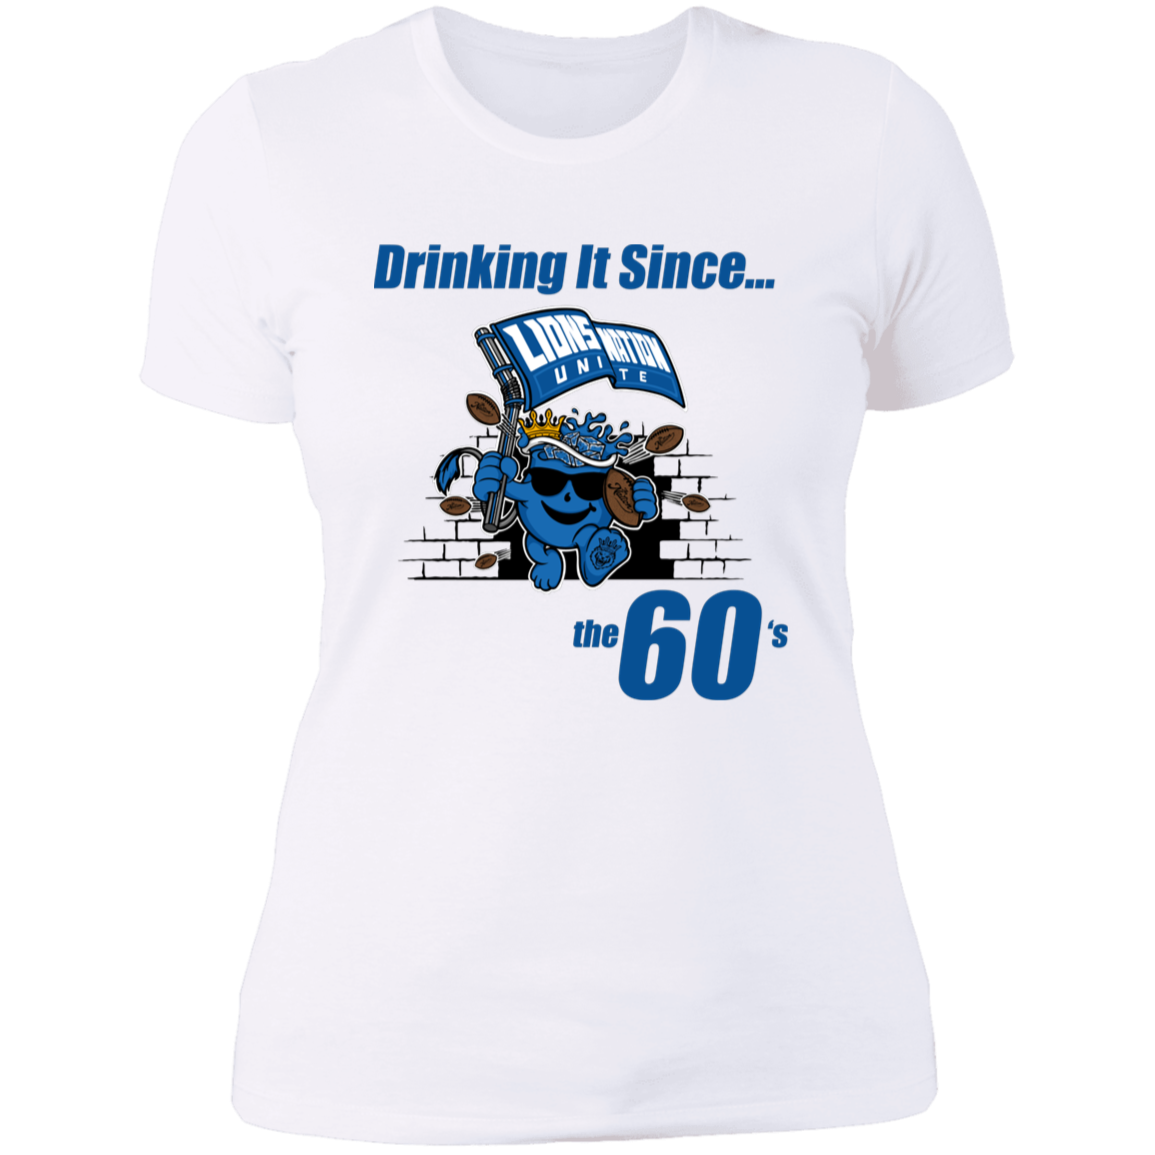 Drinking It Since the 60's Women's T-Shirt